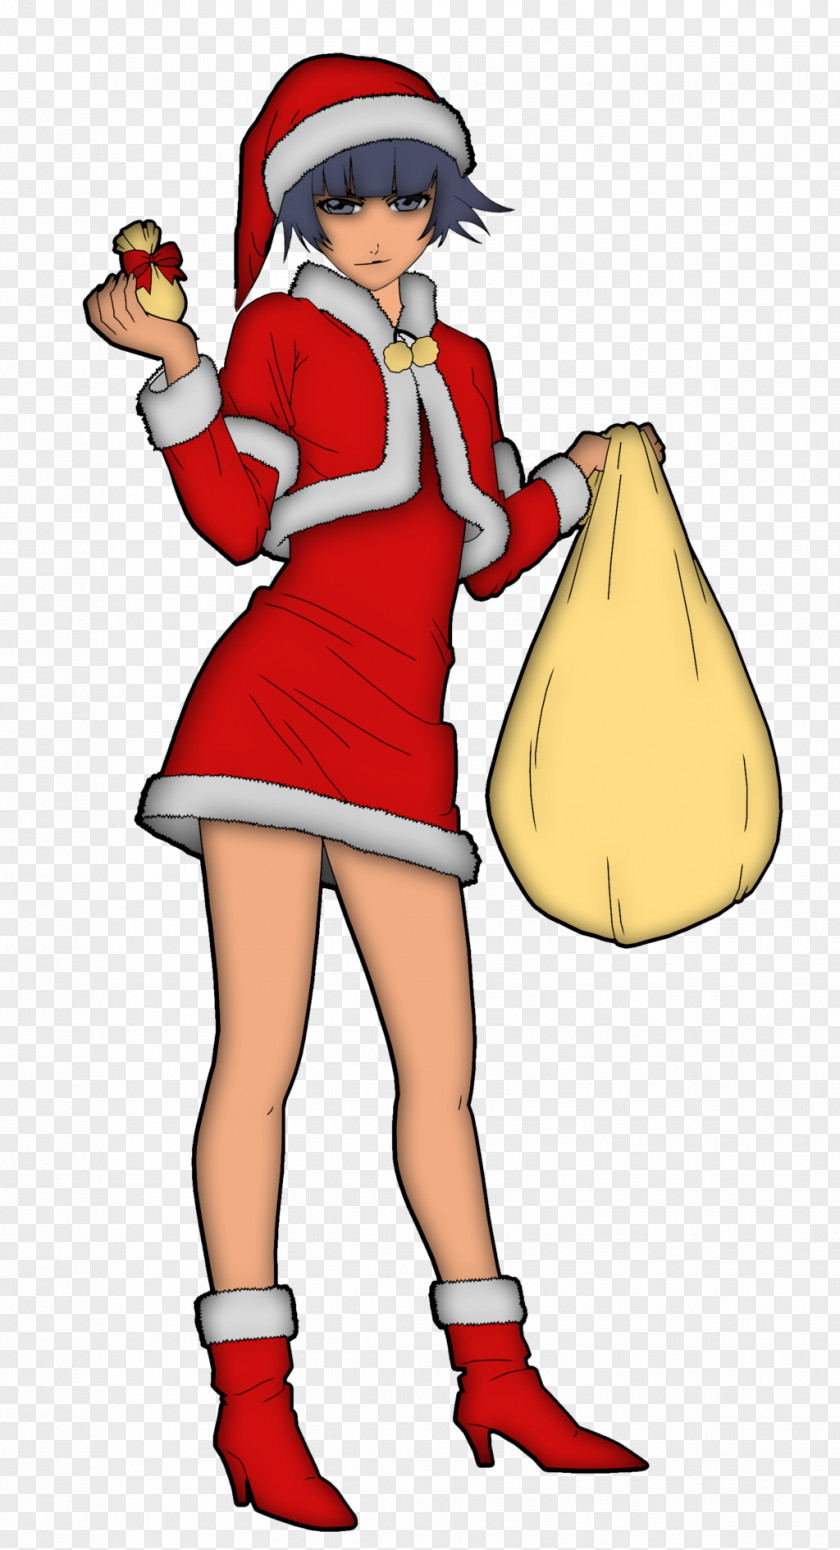 Santa Claus Christmas Ornament Costume Clip Art PNG